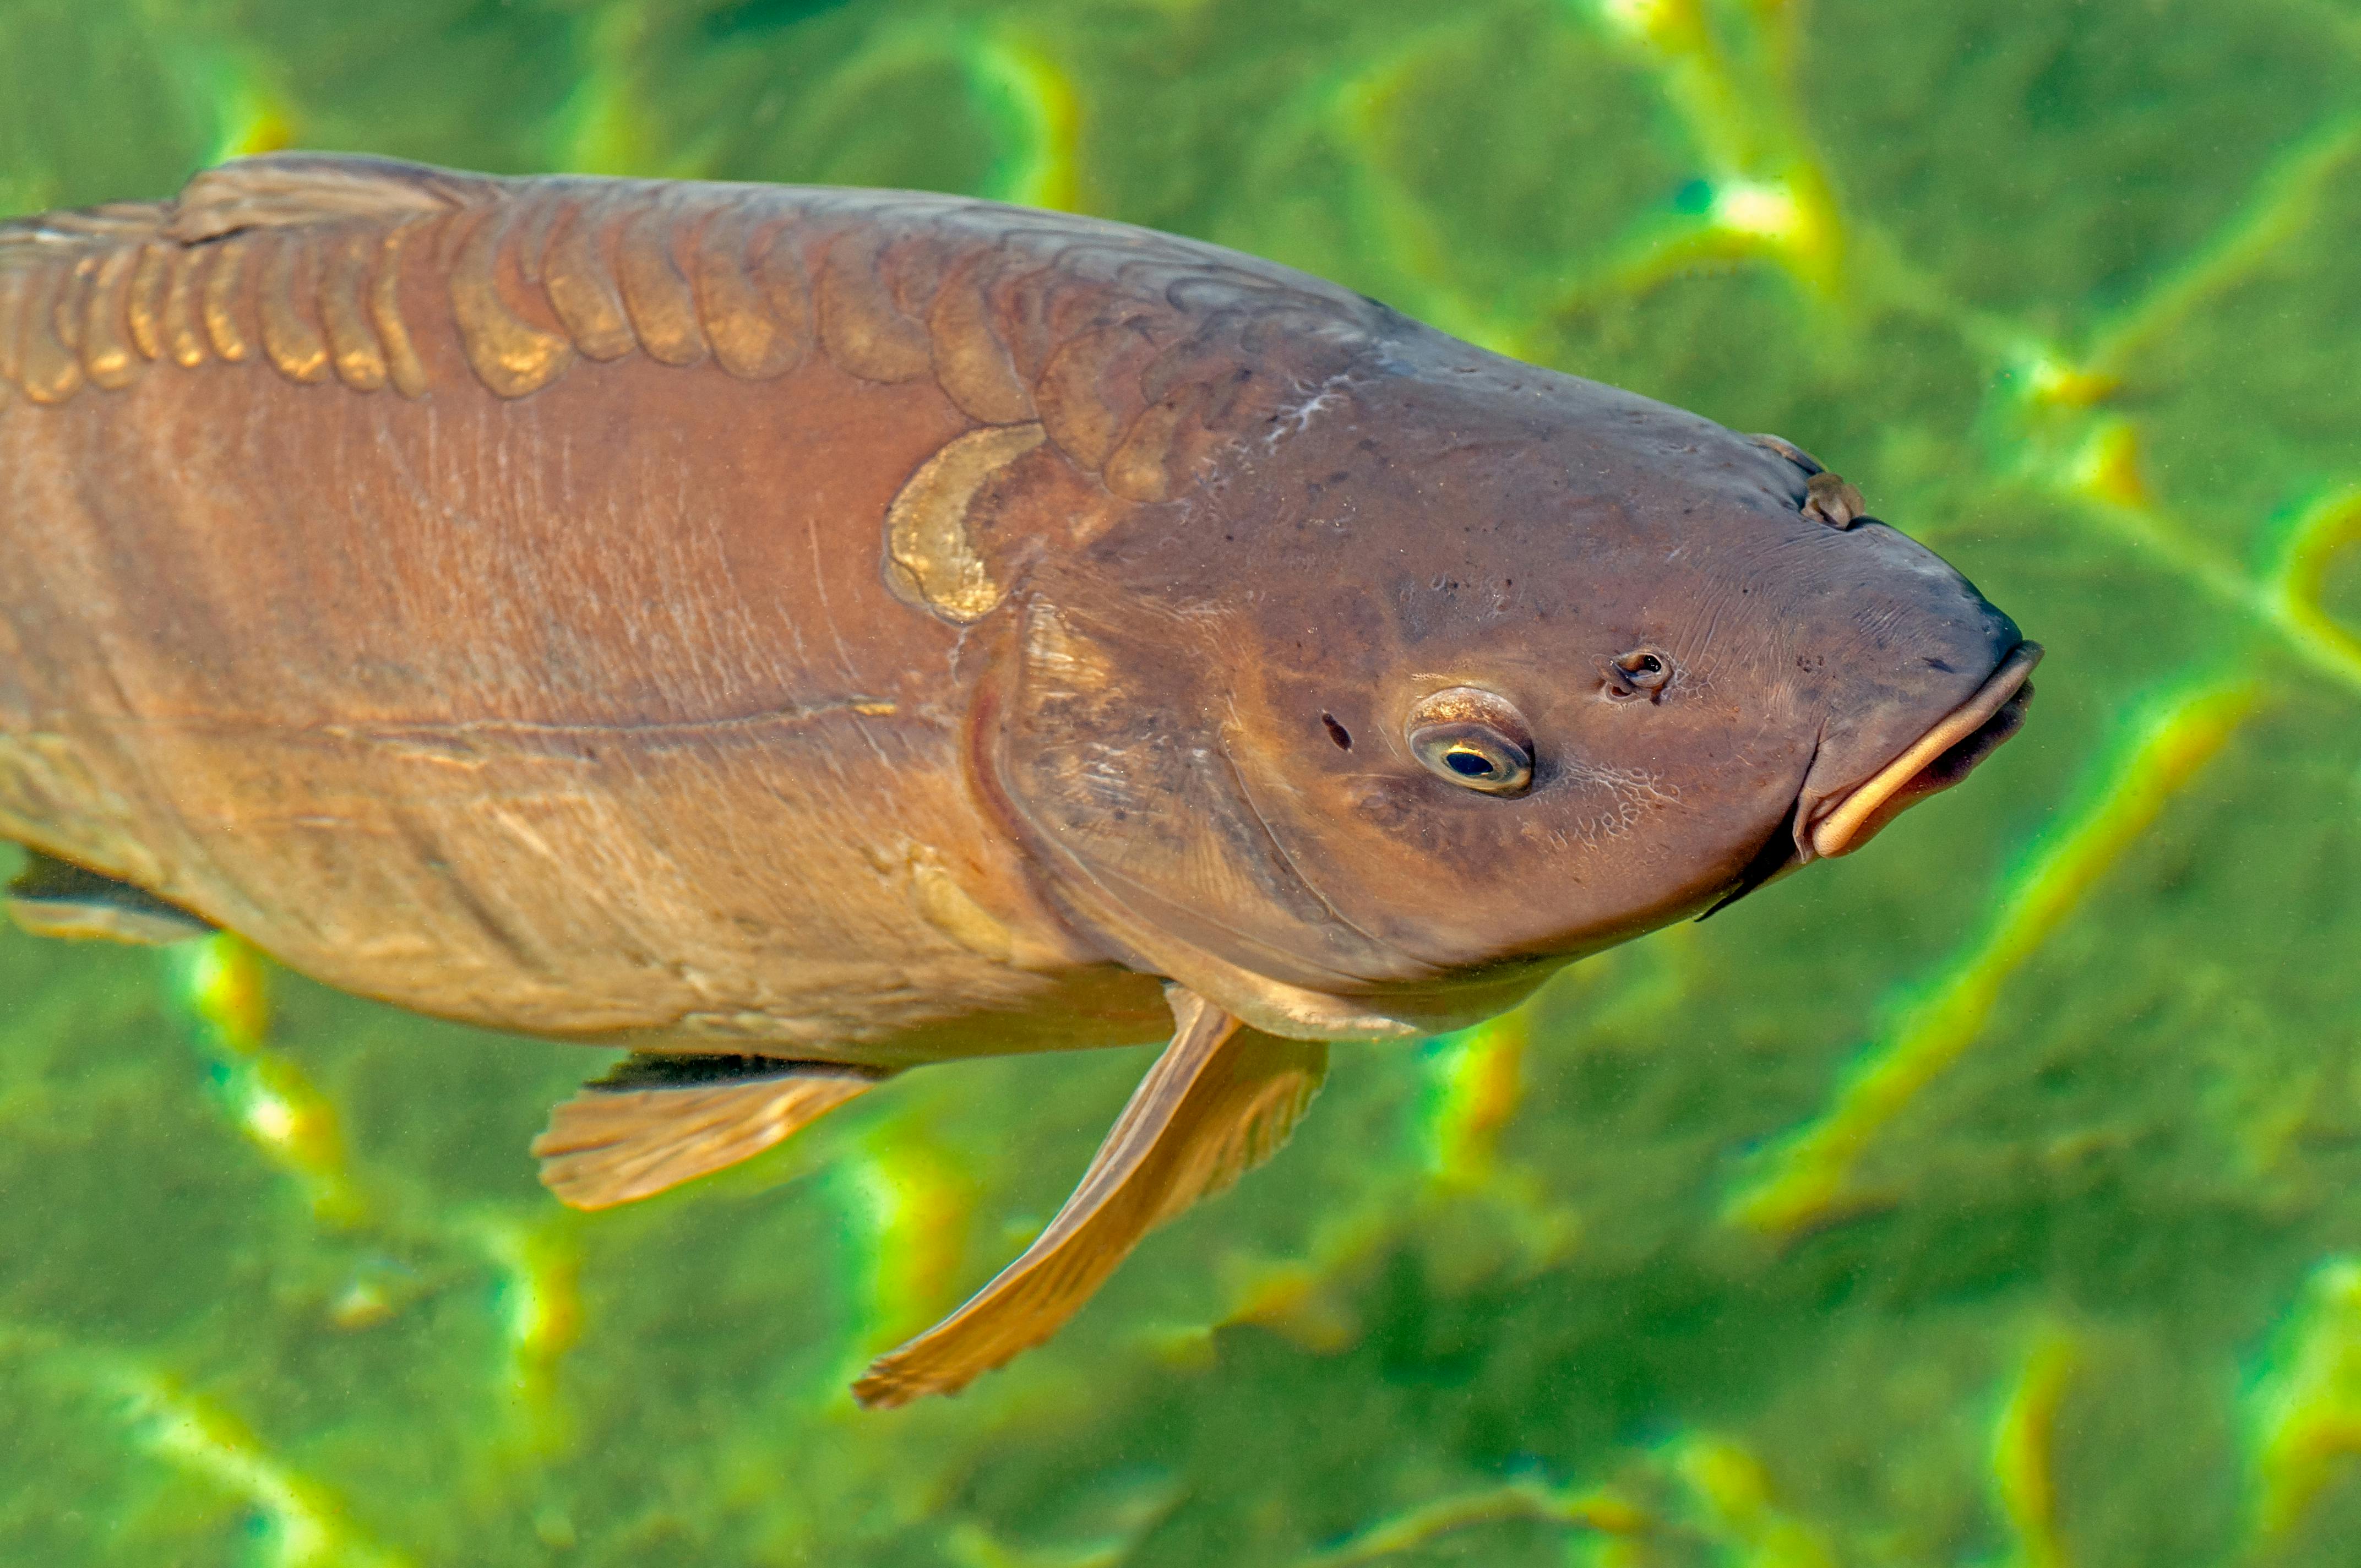 Close-Up Shot of a Carp Fish · Free Stock Photo